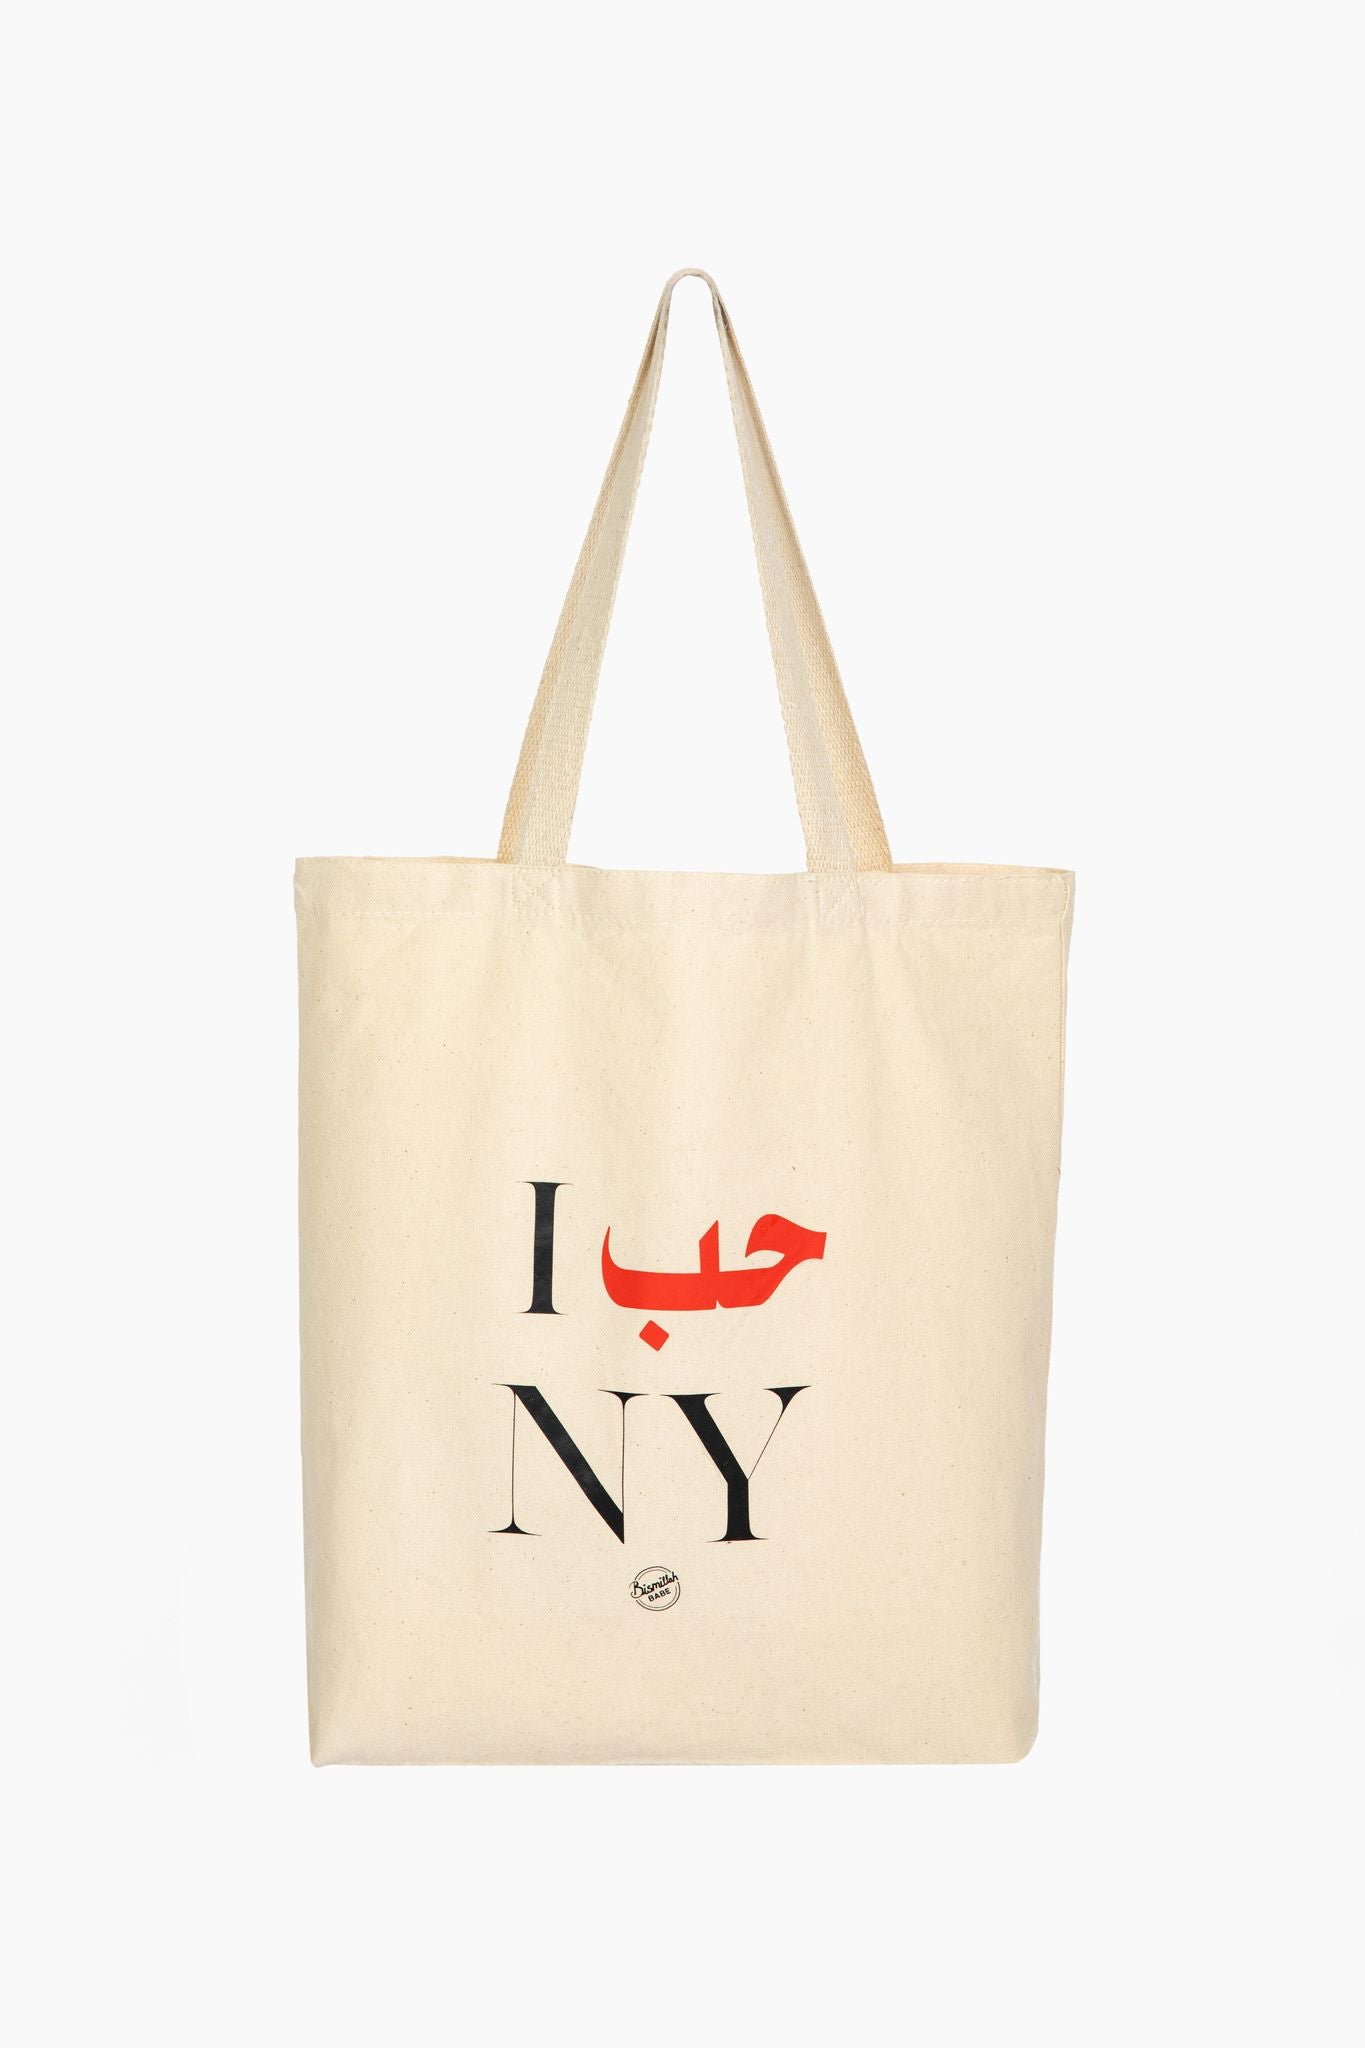 I حب (love) NY Tote Bag